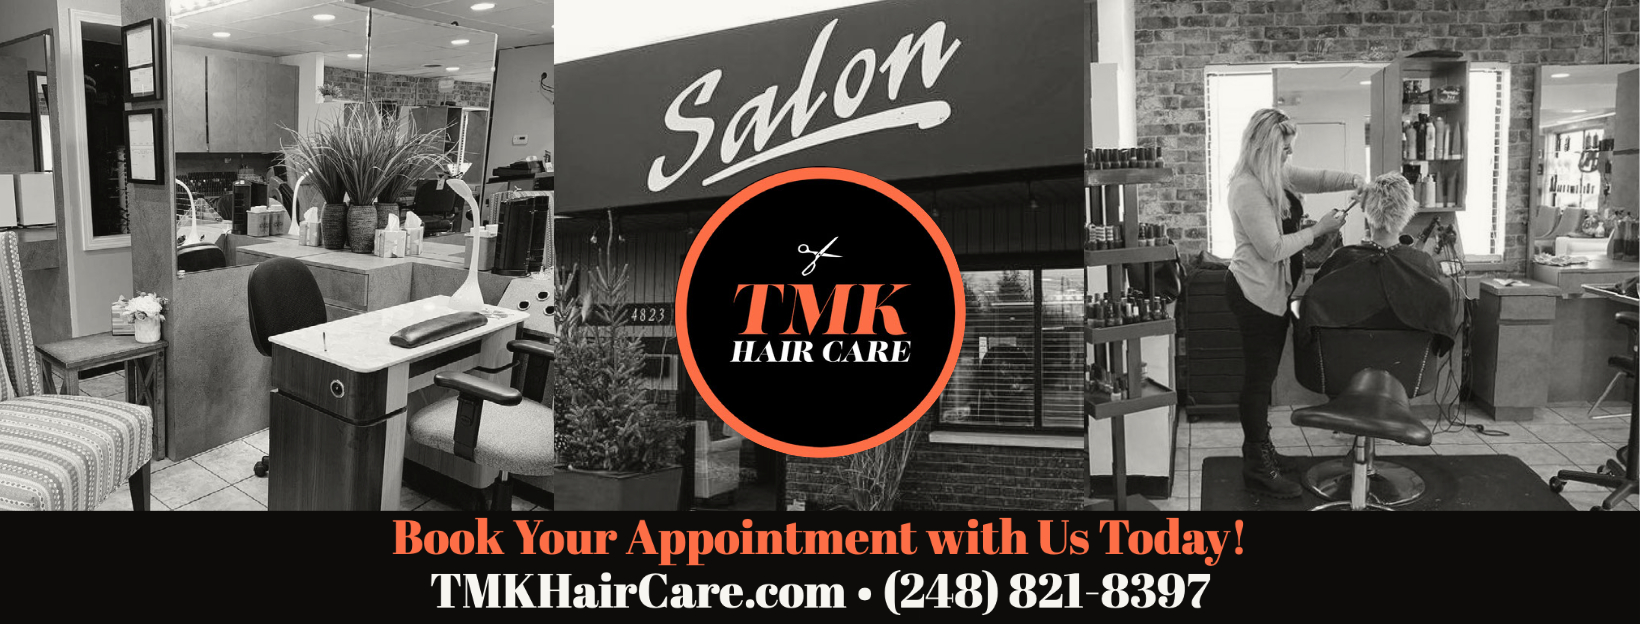 TMK Hair Care